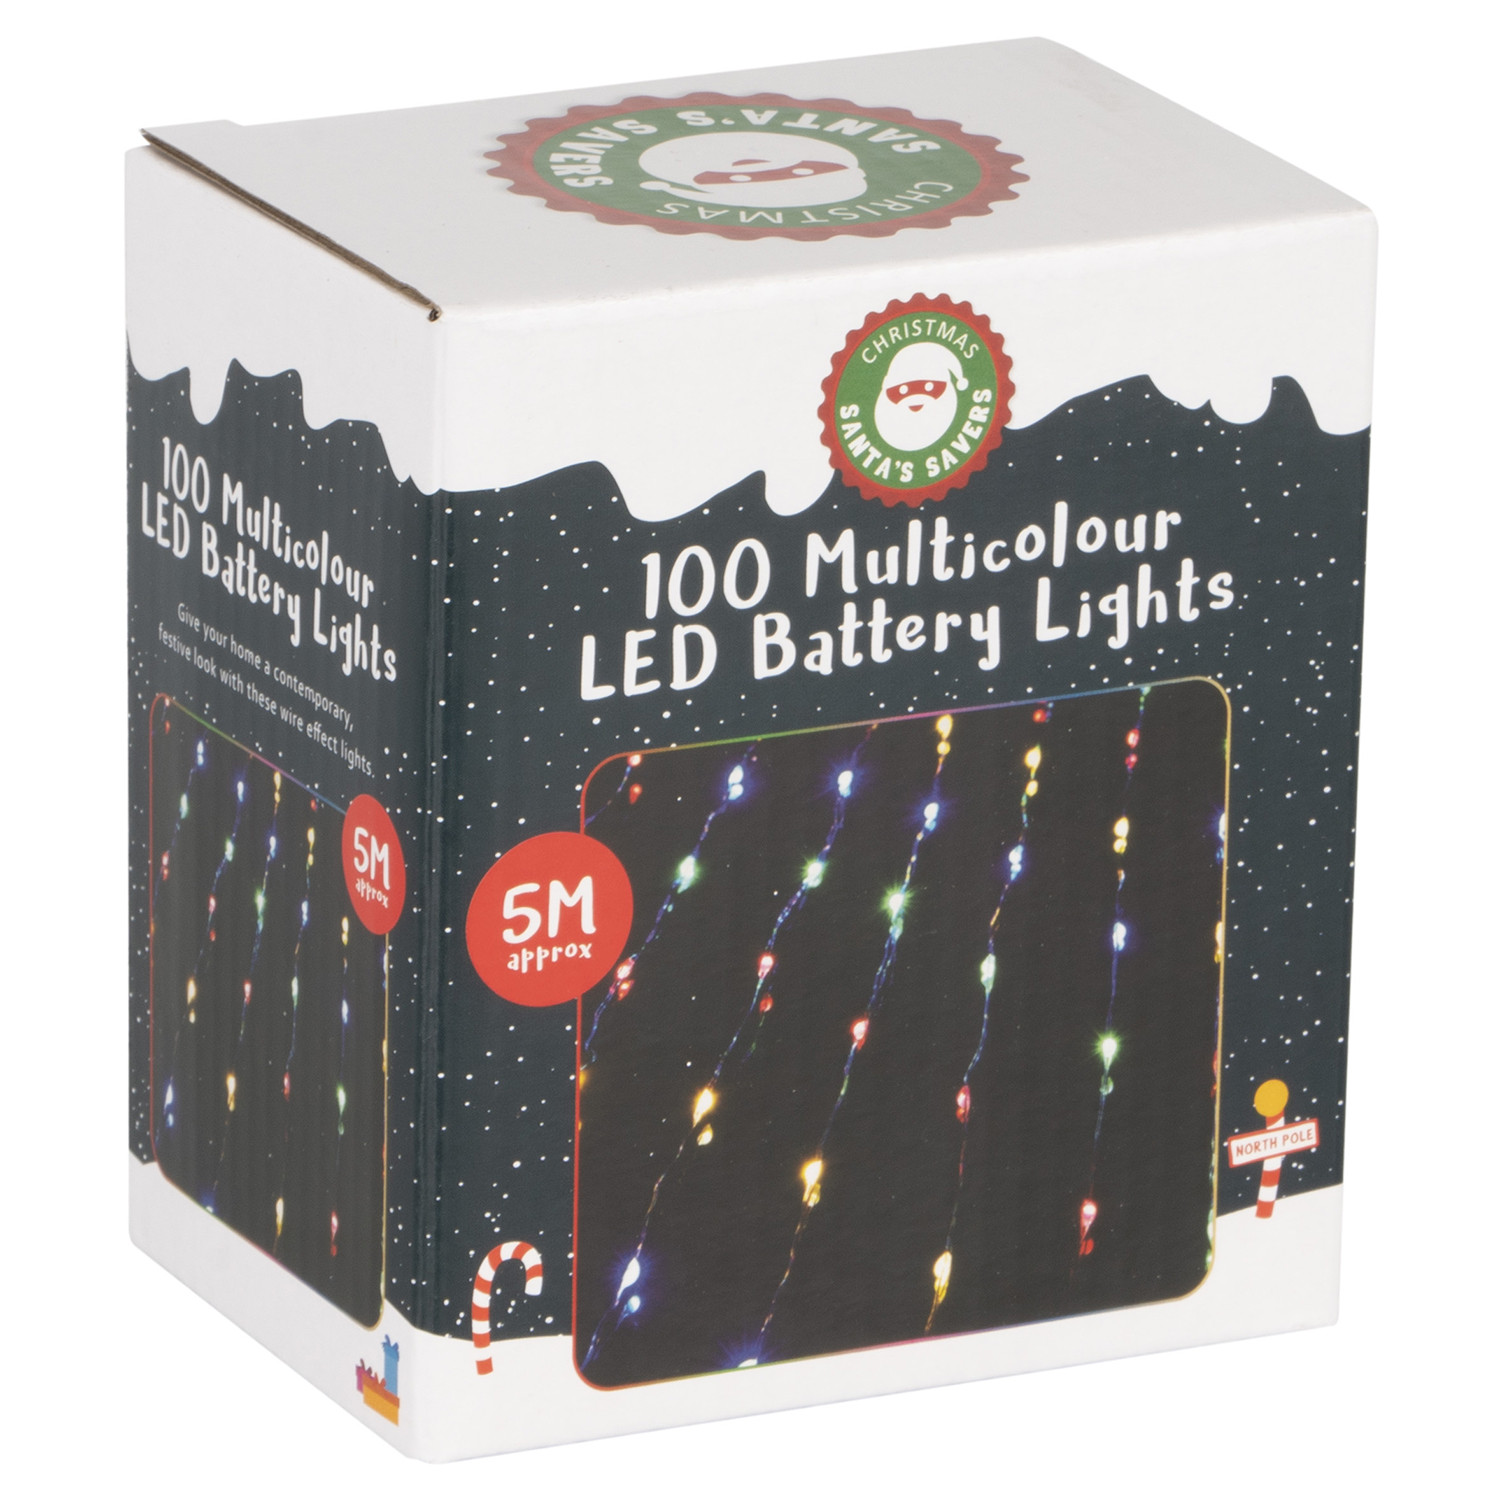 100 LED Battery Lights - Multi-Coloured Image